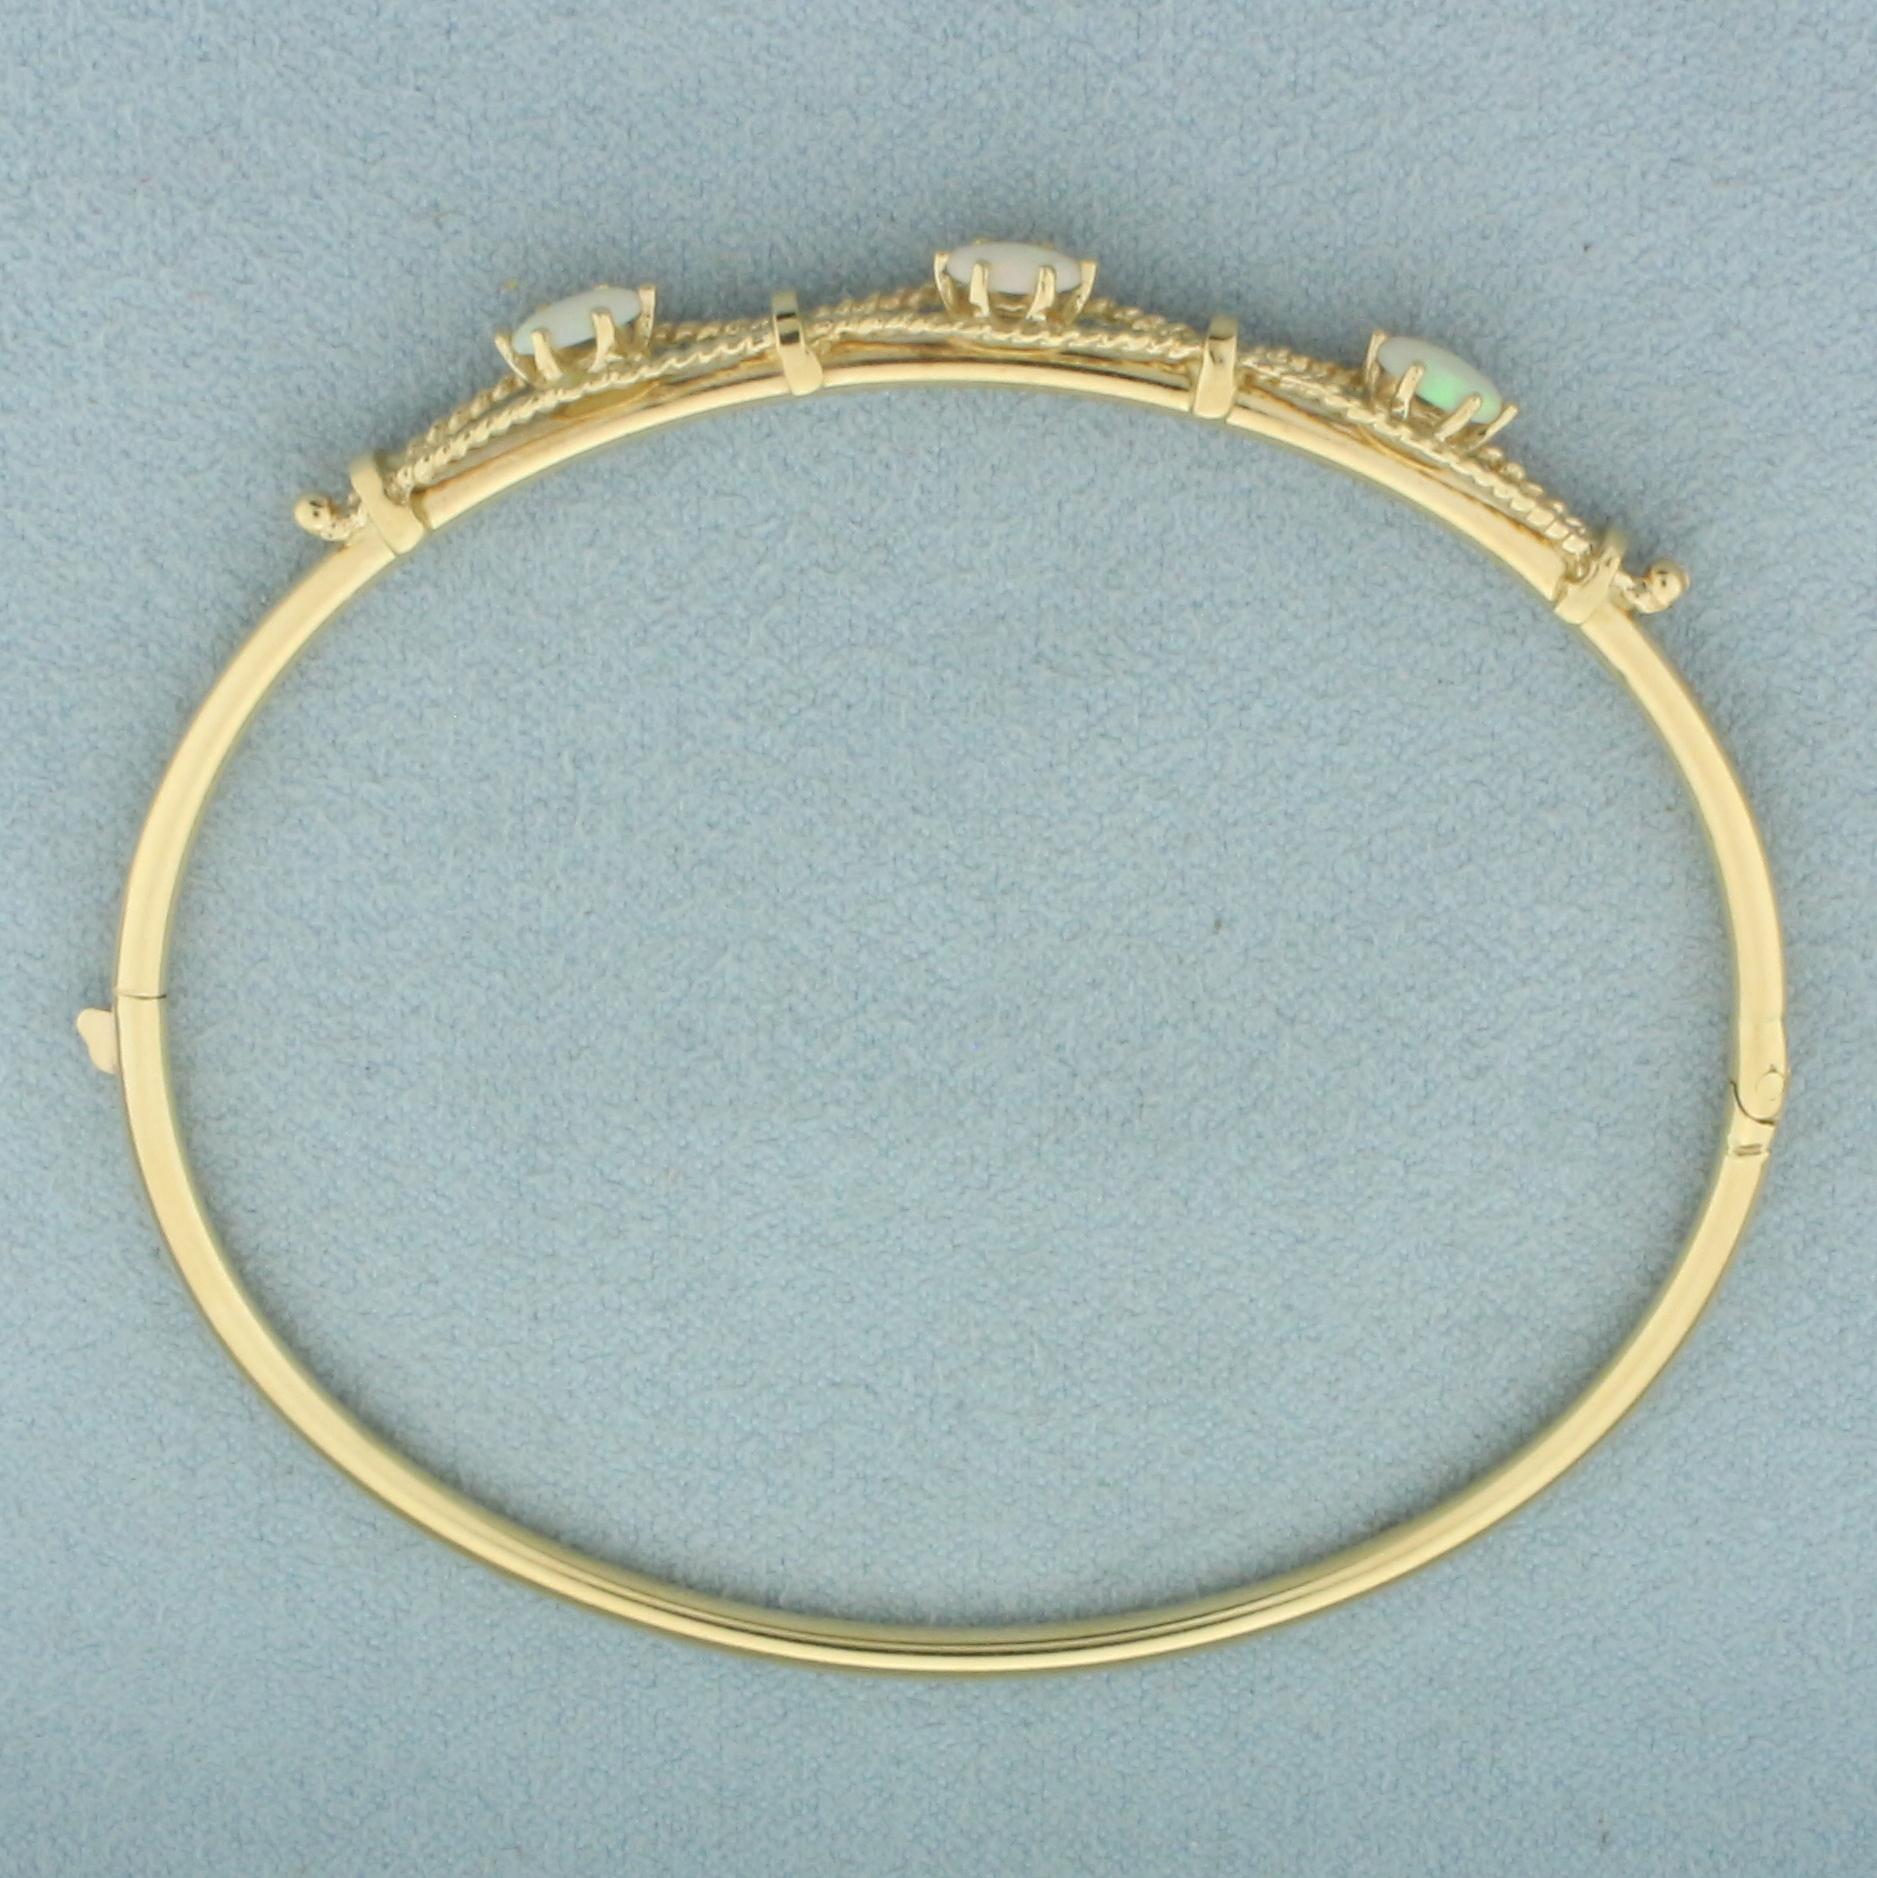 Opal Rope Design Bangle Bracelet In 14k Yellow Gold